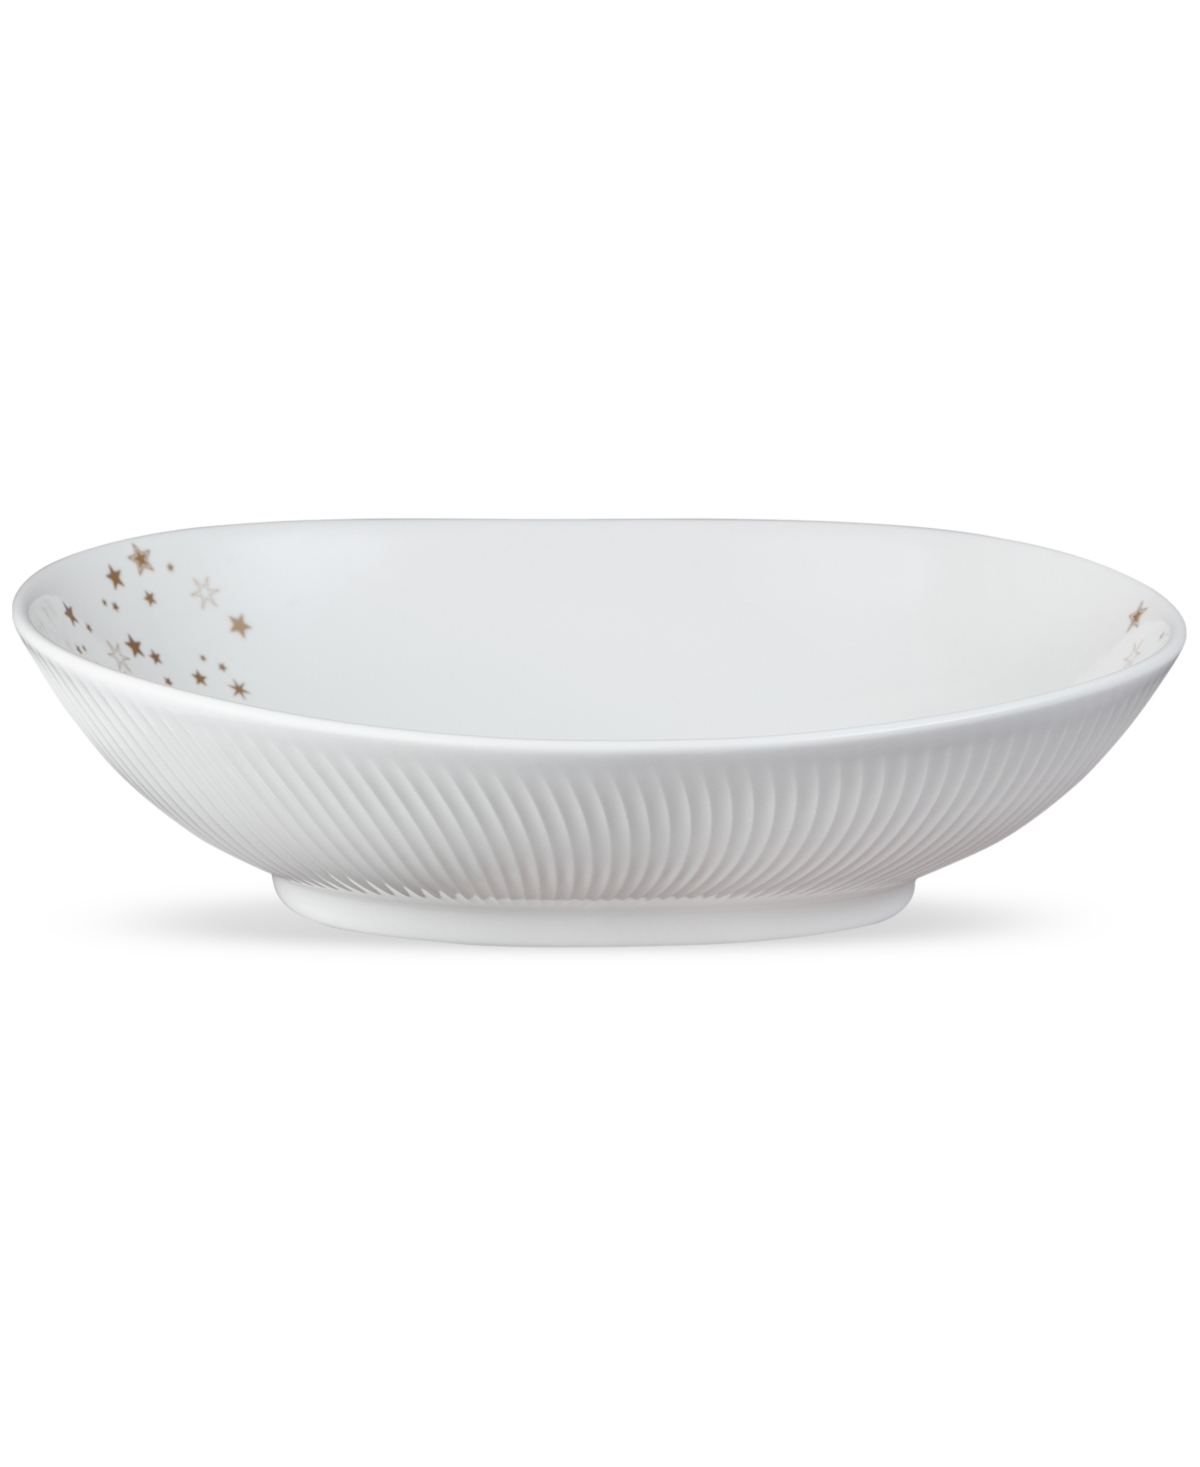 Arc Collection Stars Porcelain Serving Bowl - White